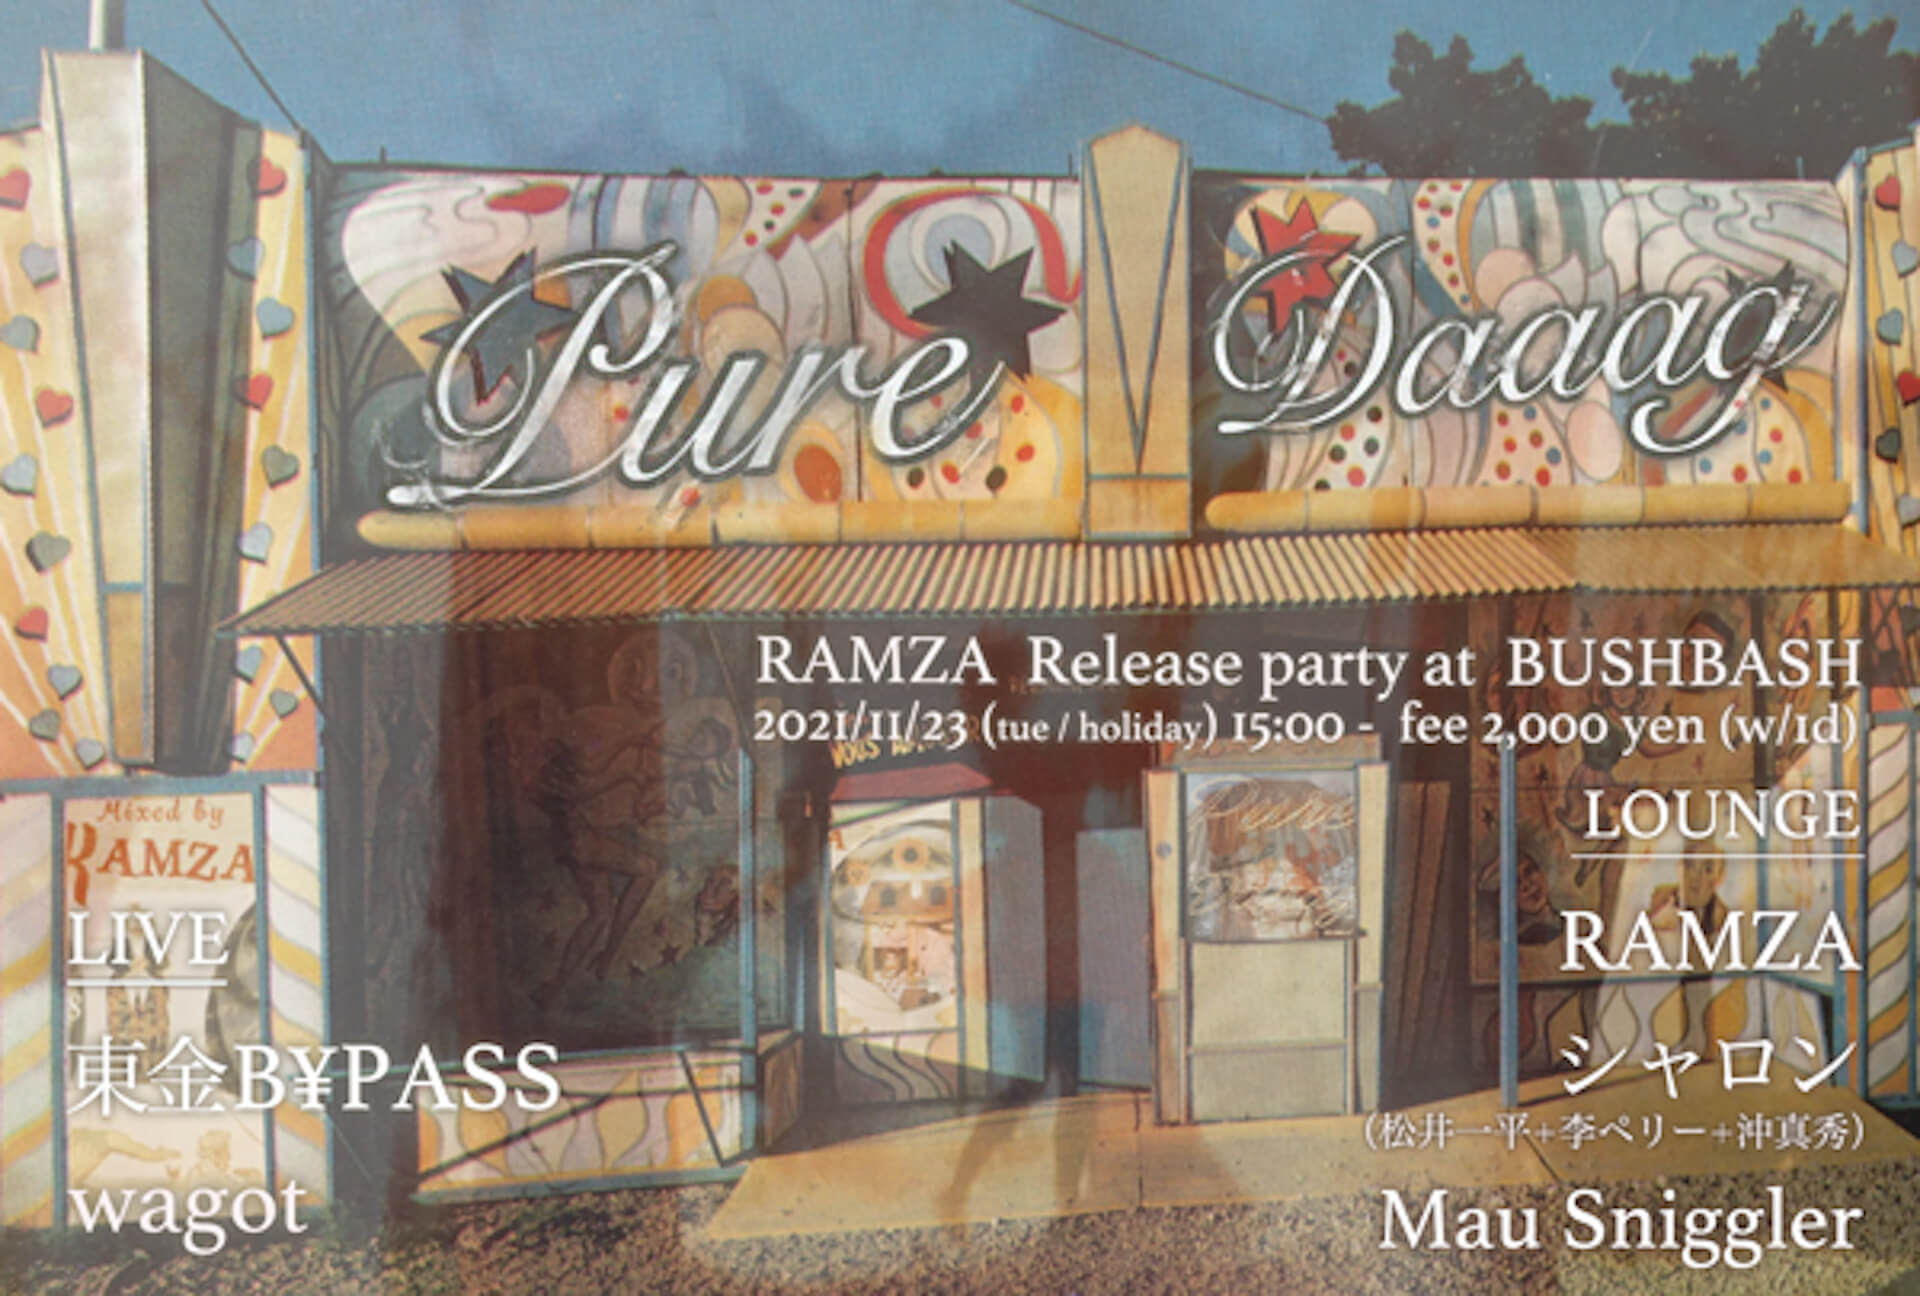 RAMZAによるmix CD『Pure Daaag』のリリースパーティーがBUSHBASHで開催決定！ music211115_ramza_1